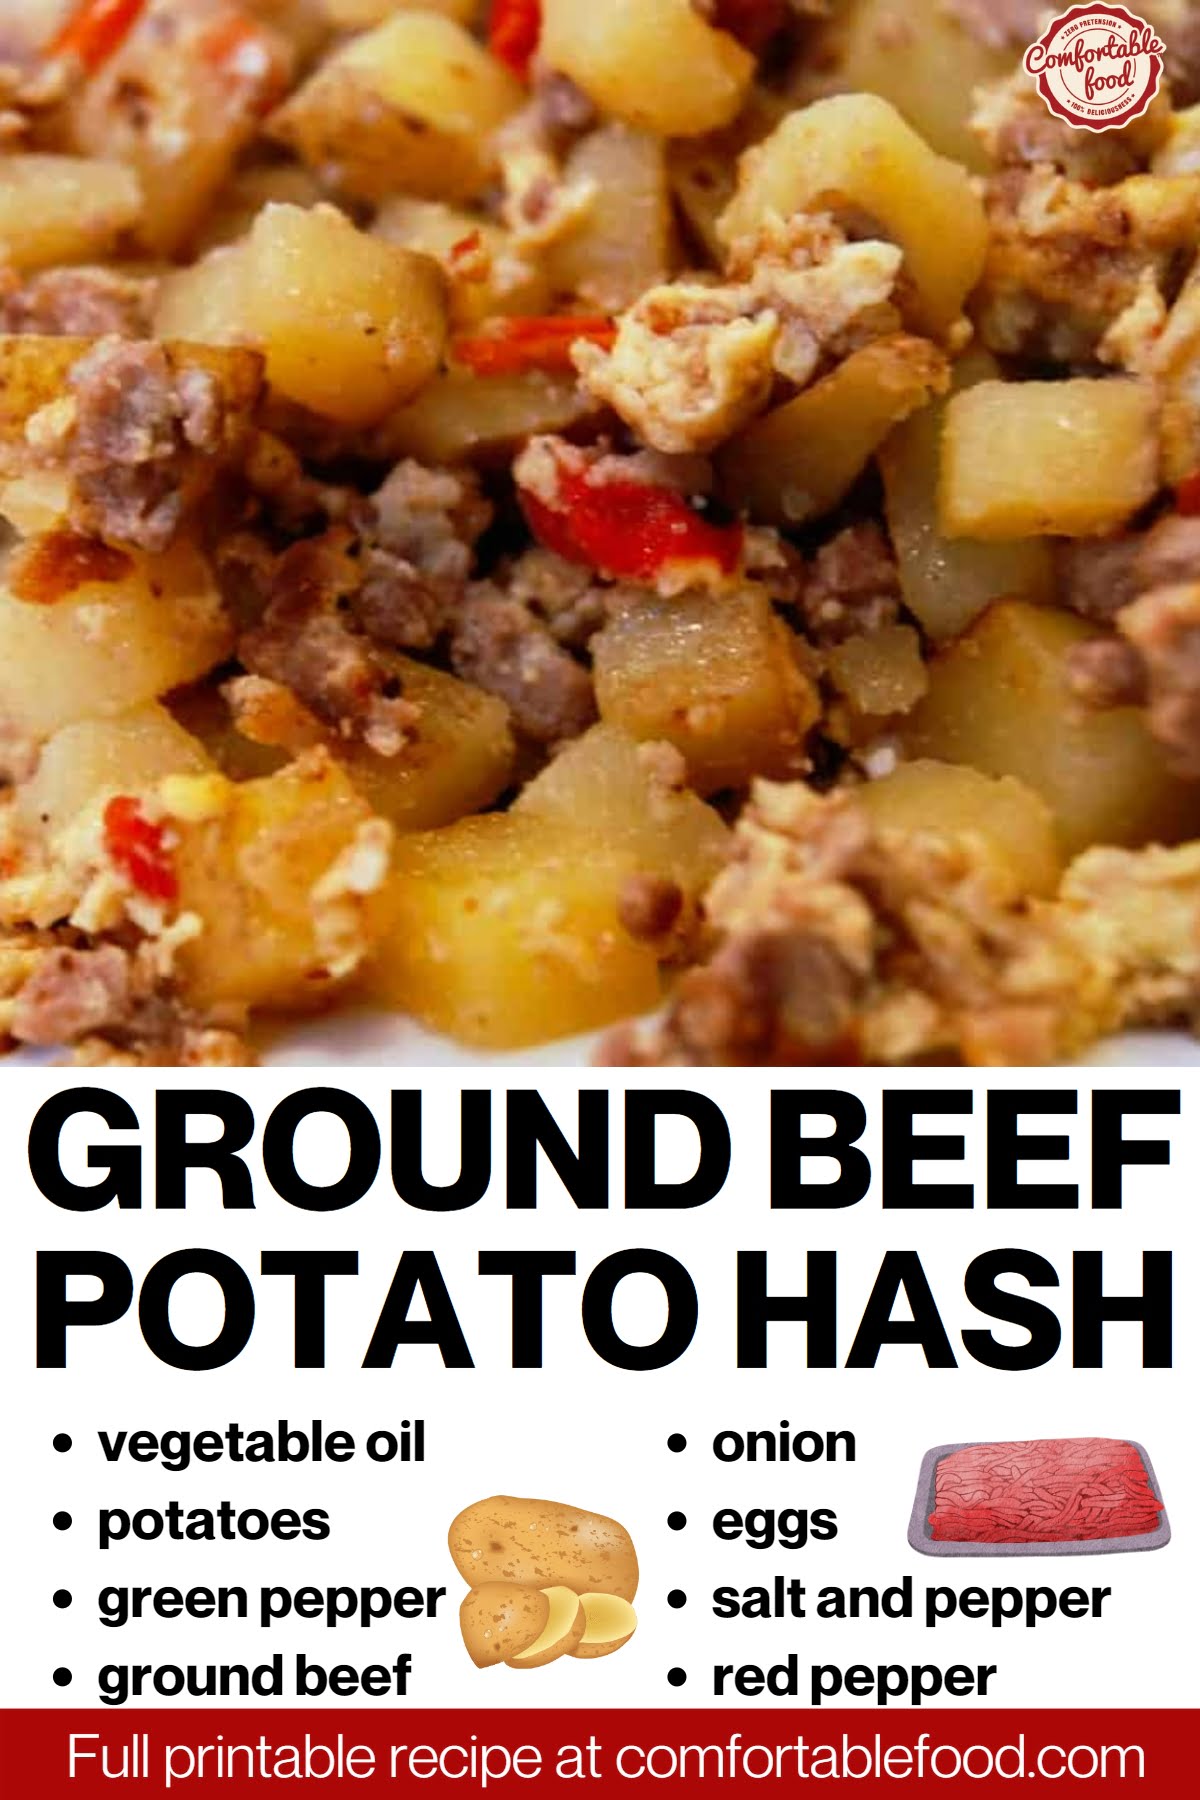 Ground beef potato hash socials